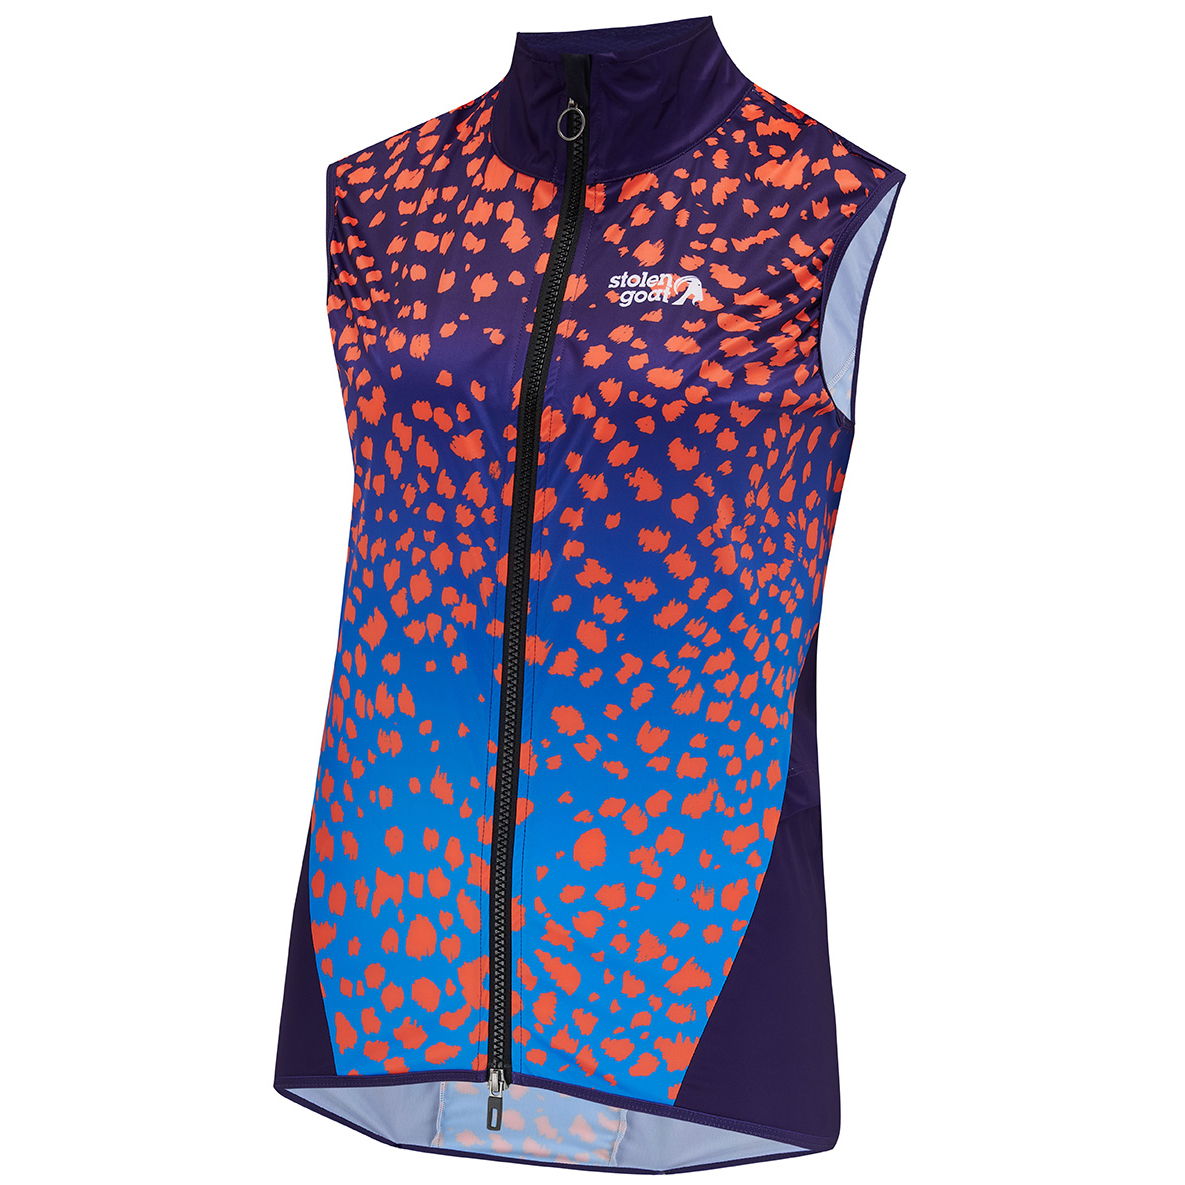 Stolen Goat women's strutter cycling gilet blue gradient with orange splat design